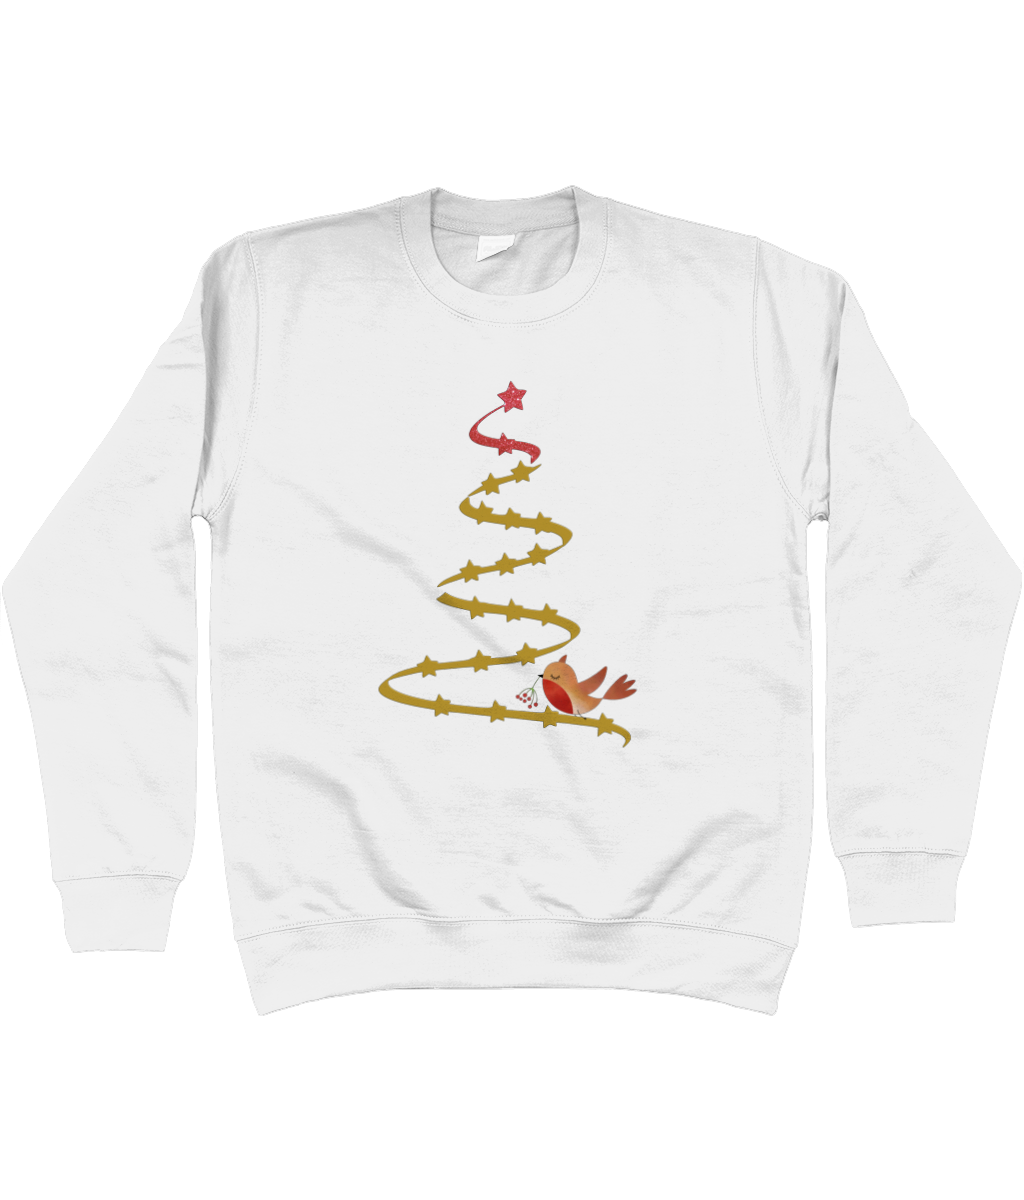 Christmas Tree and Robin Sweatshirt